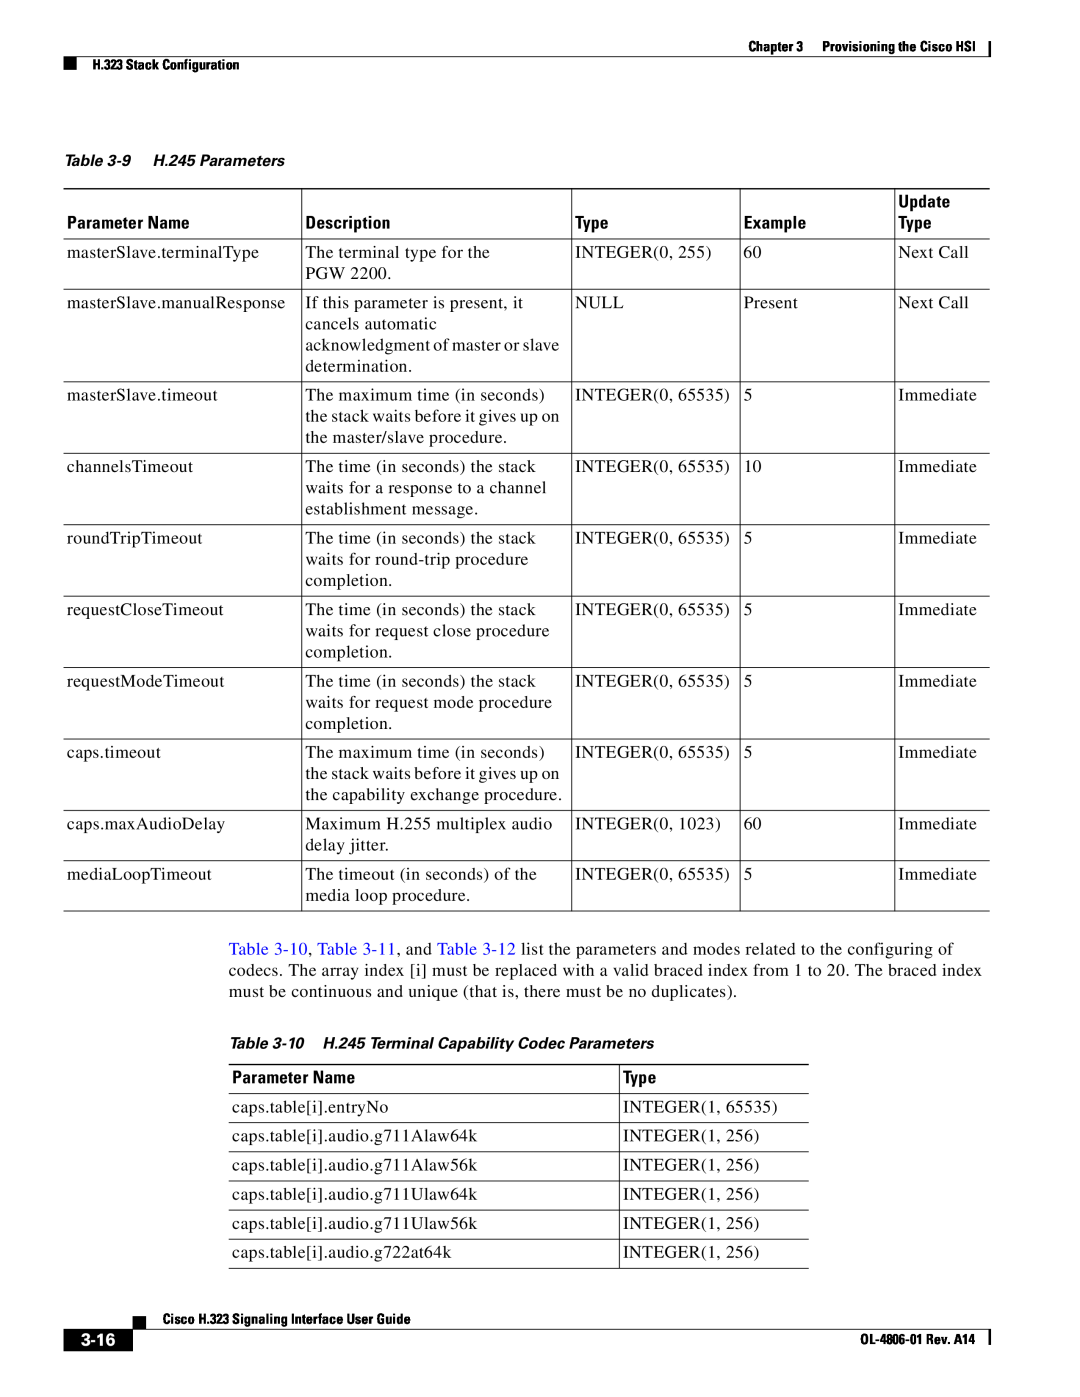 Cisco Systems H.323 appendix Update, 3-16, Parameter Name, Description, Type, Example 